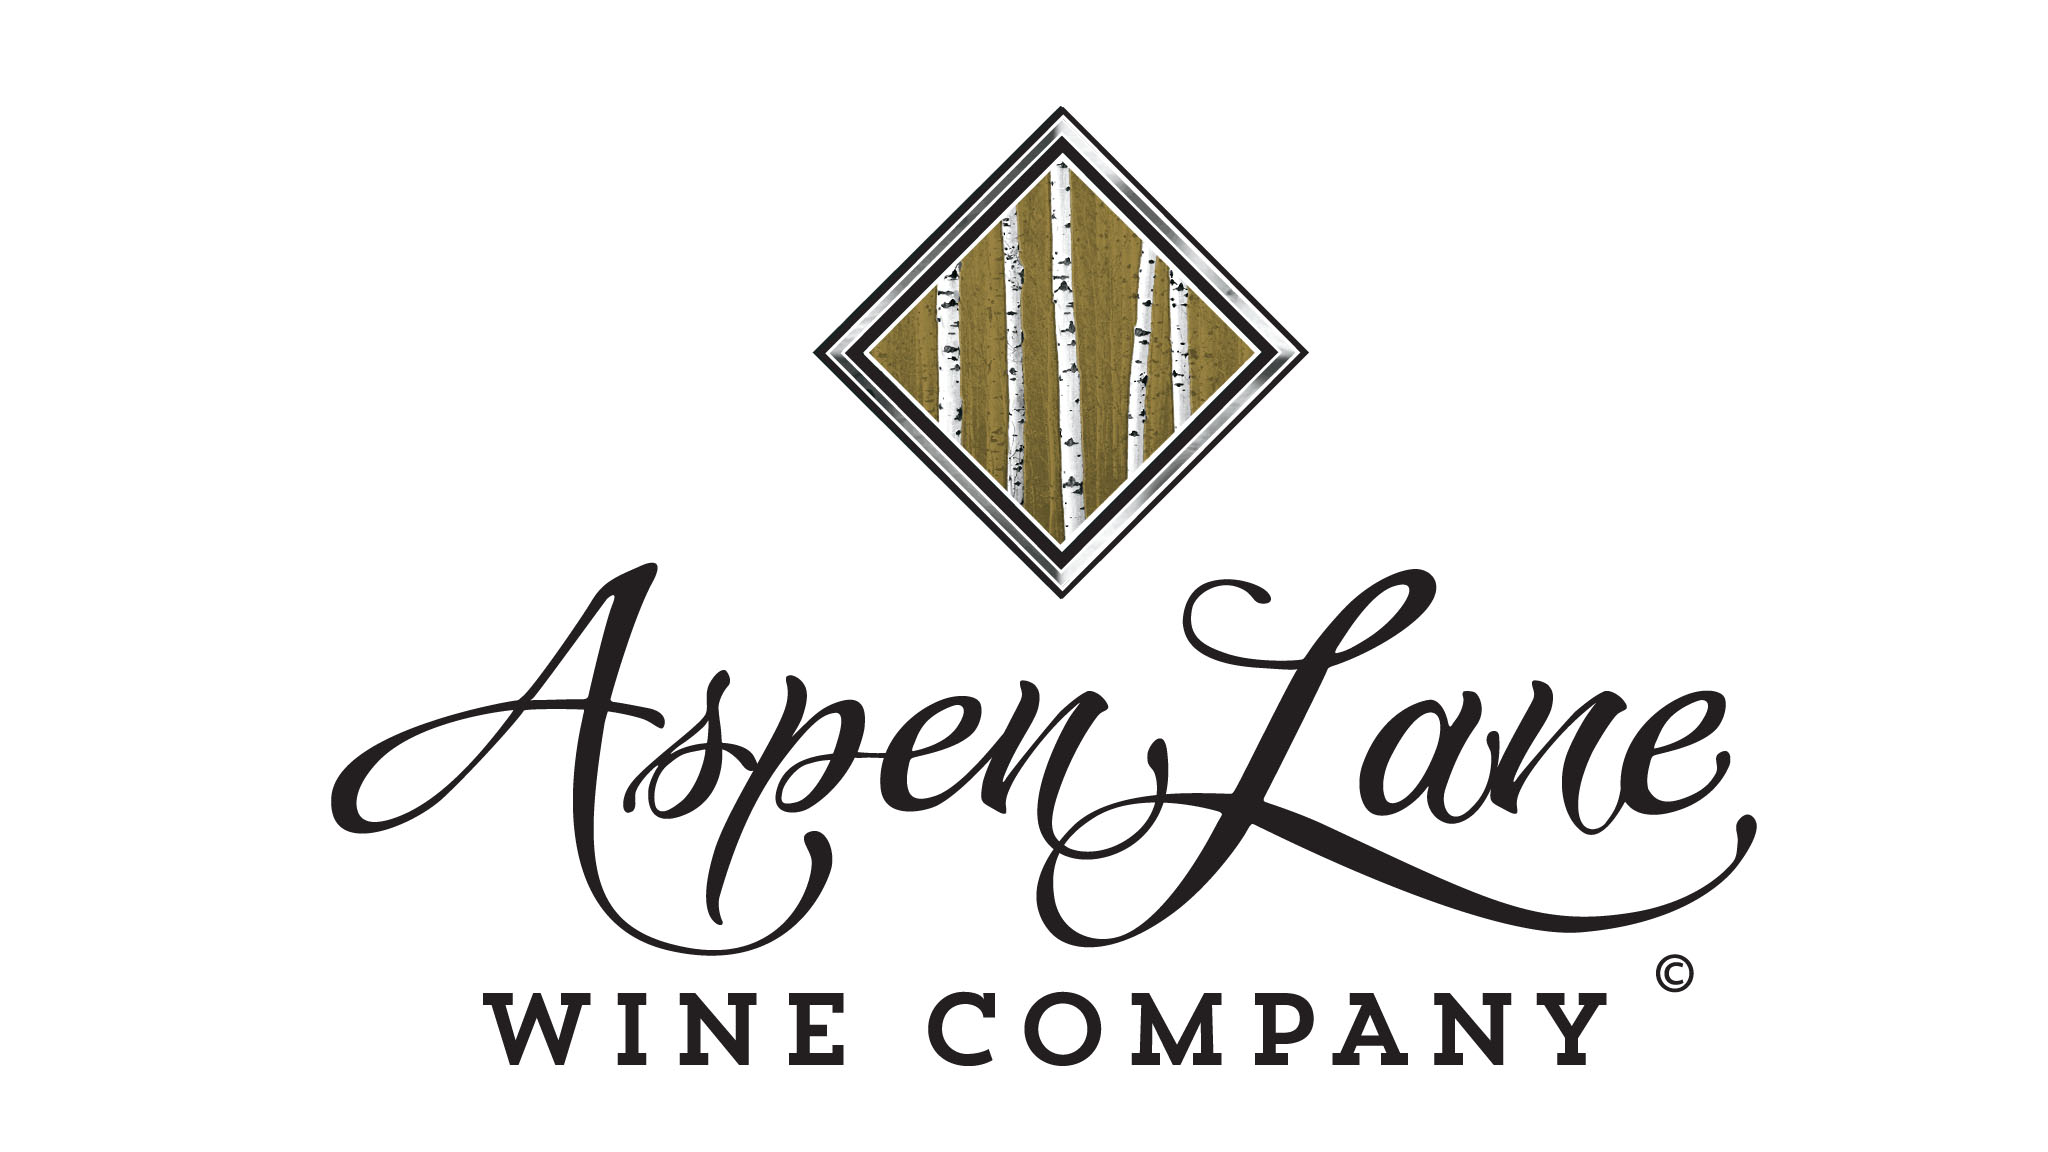 Aspen Lane Wine Company